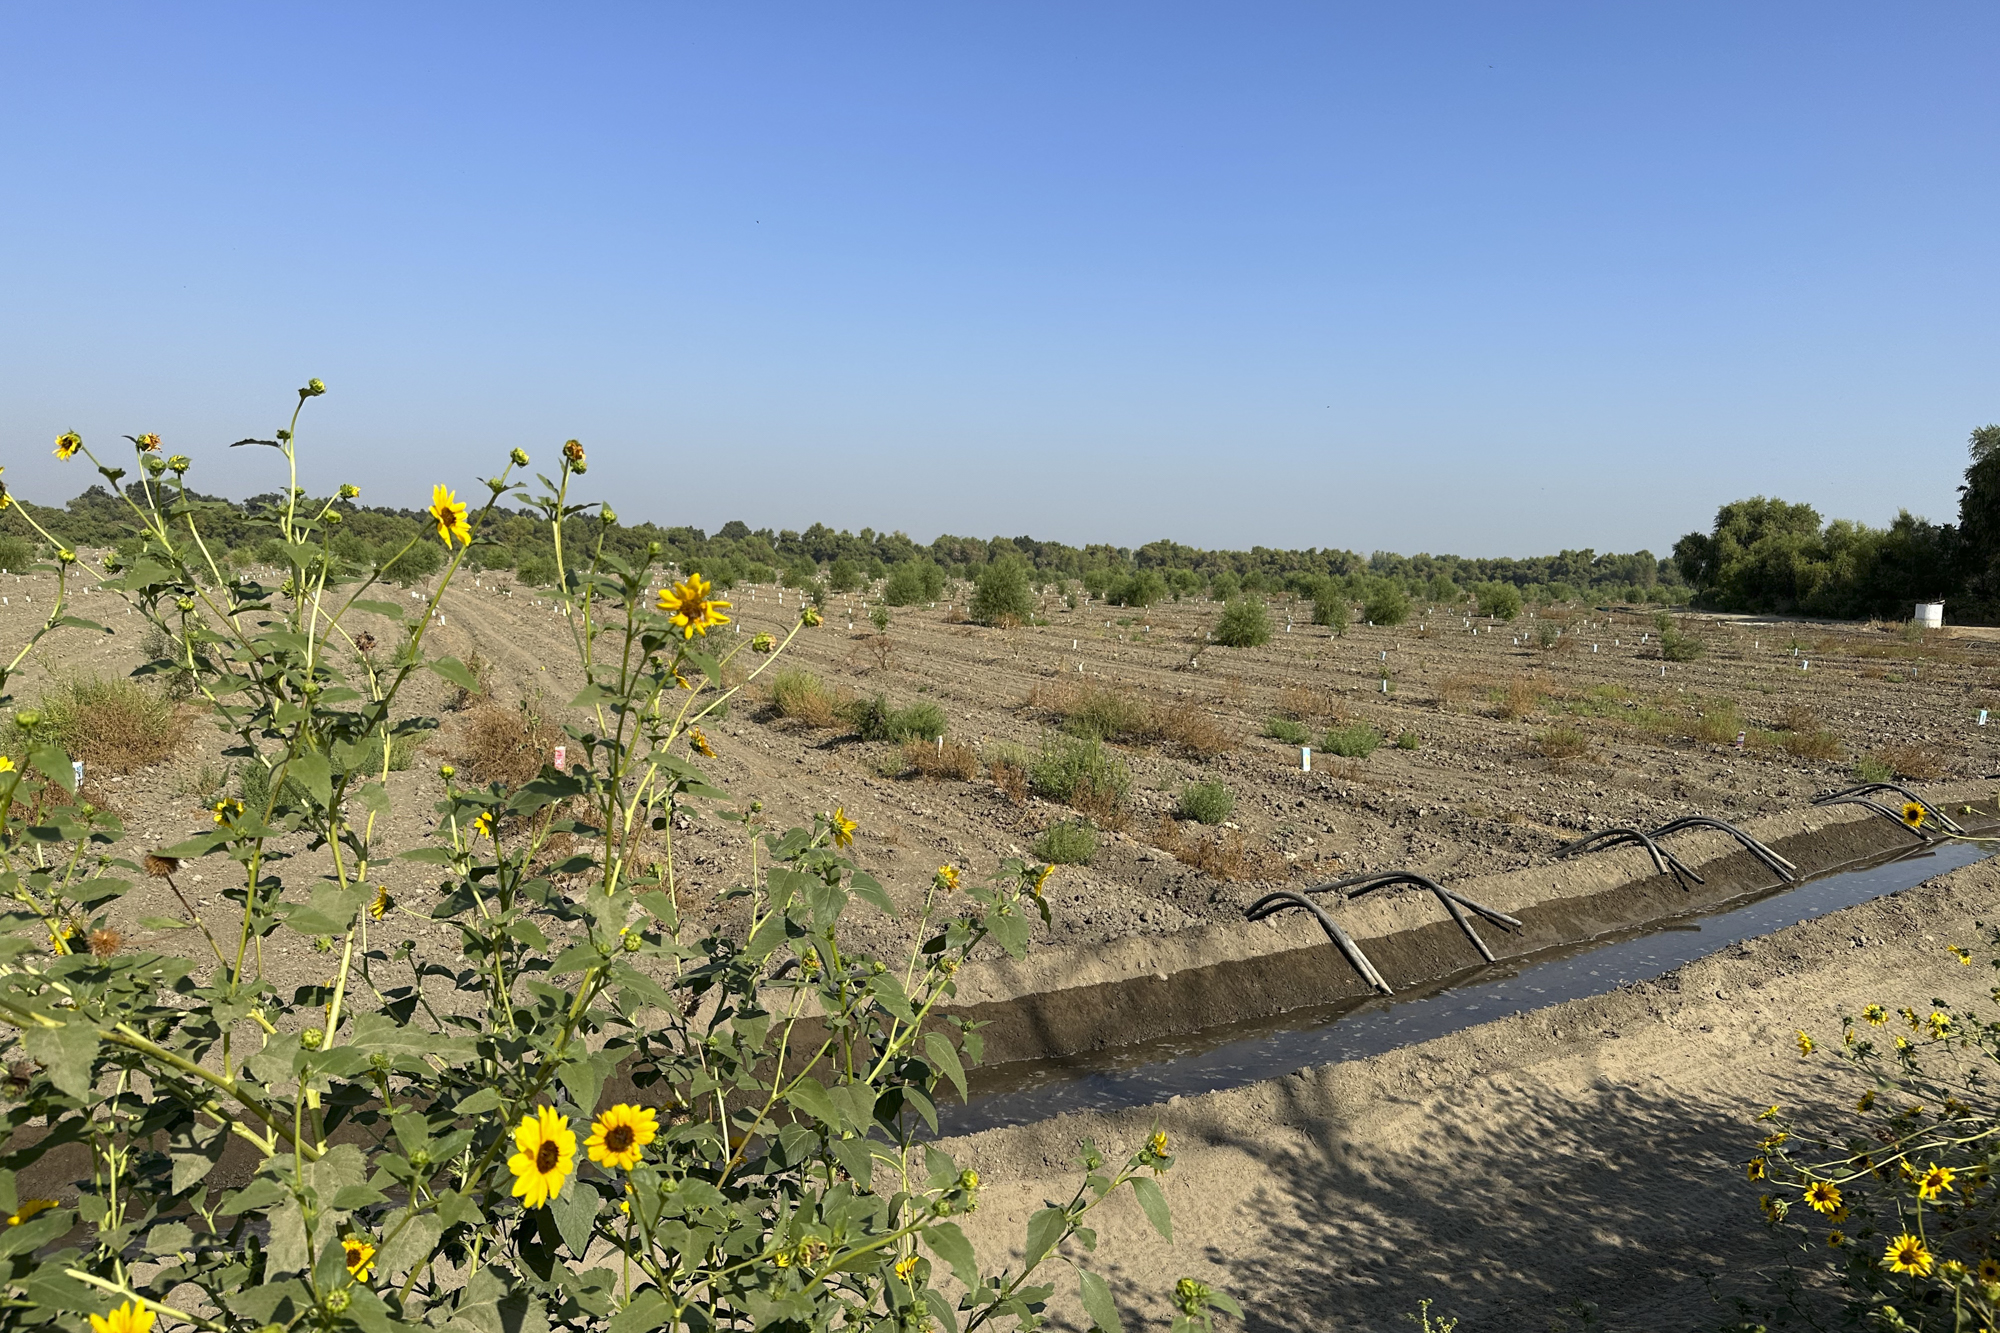 A dry field with an irrigation channel alongside it.